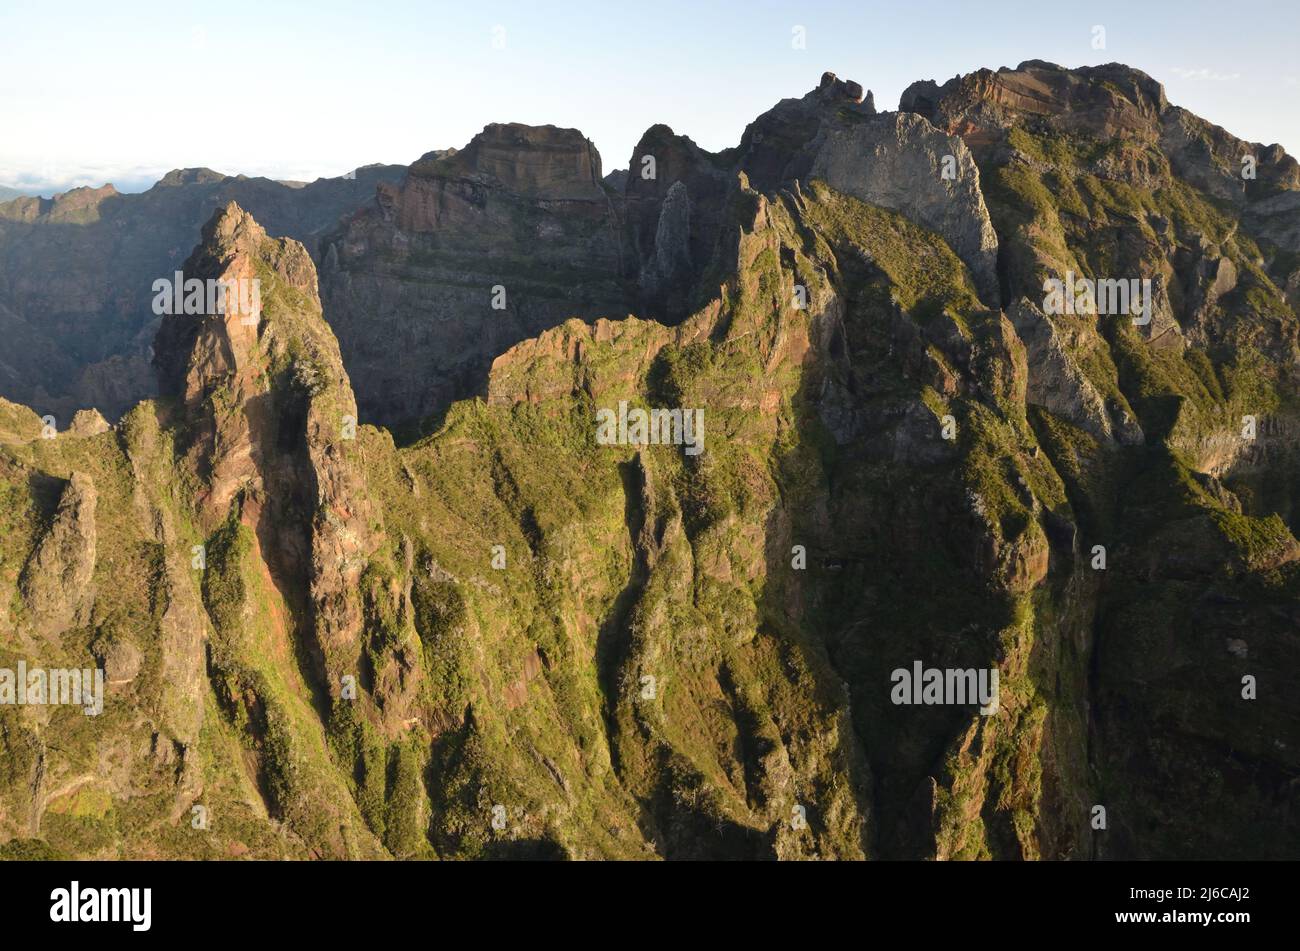 The precipitous mountain ridge between Pico do Arieiro, Pico dos Torres and Pico Ruivo, the highest mountains on the island of Madeira, Portugal. Stock Photo